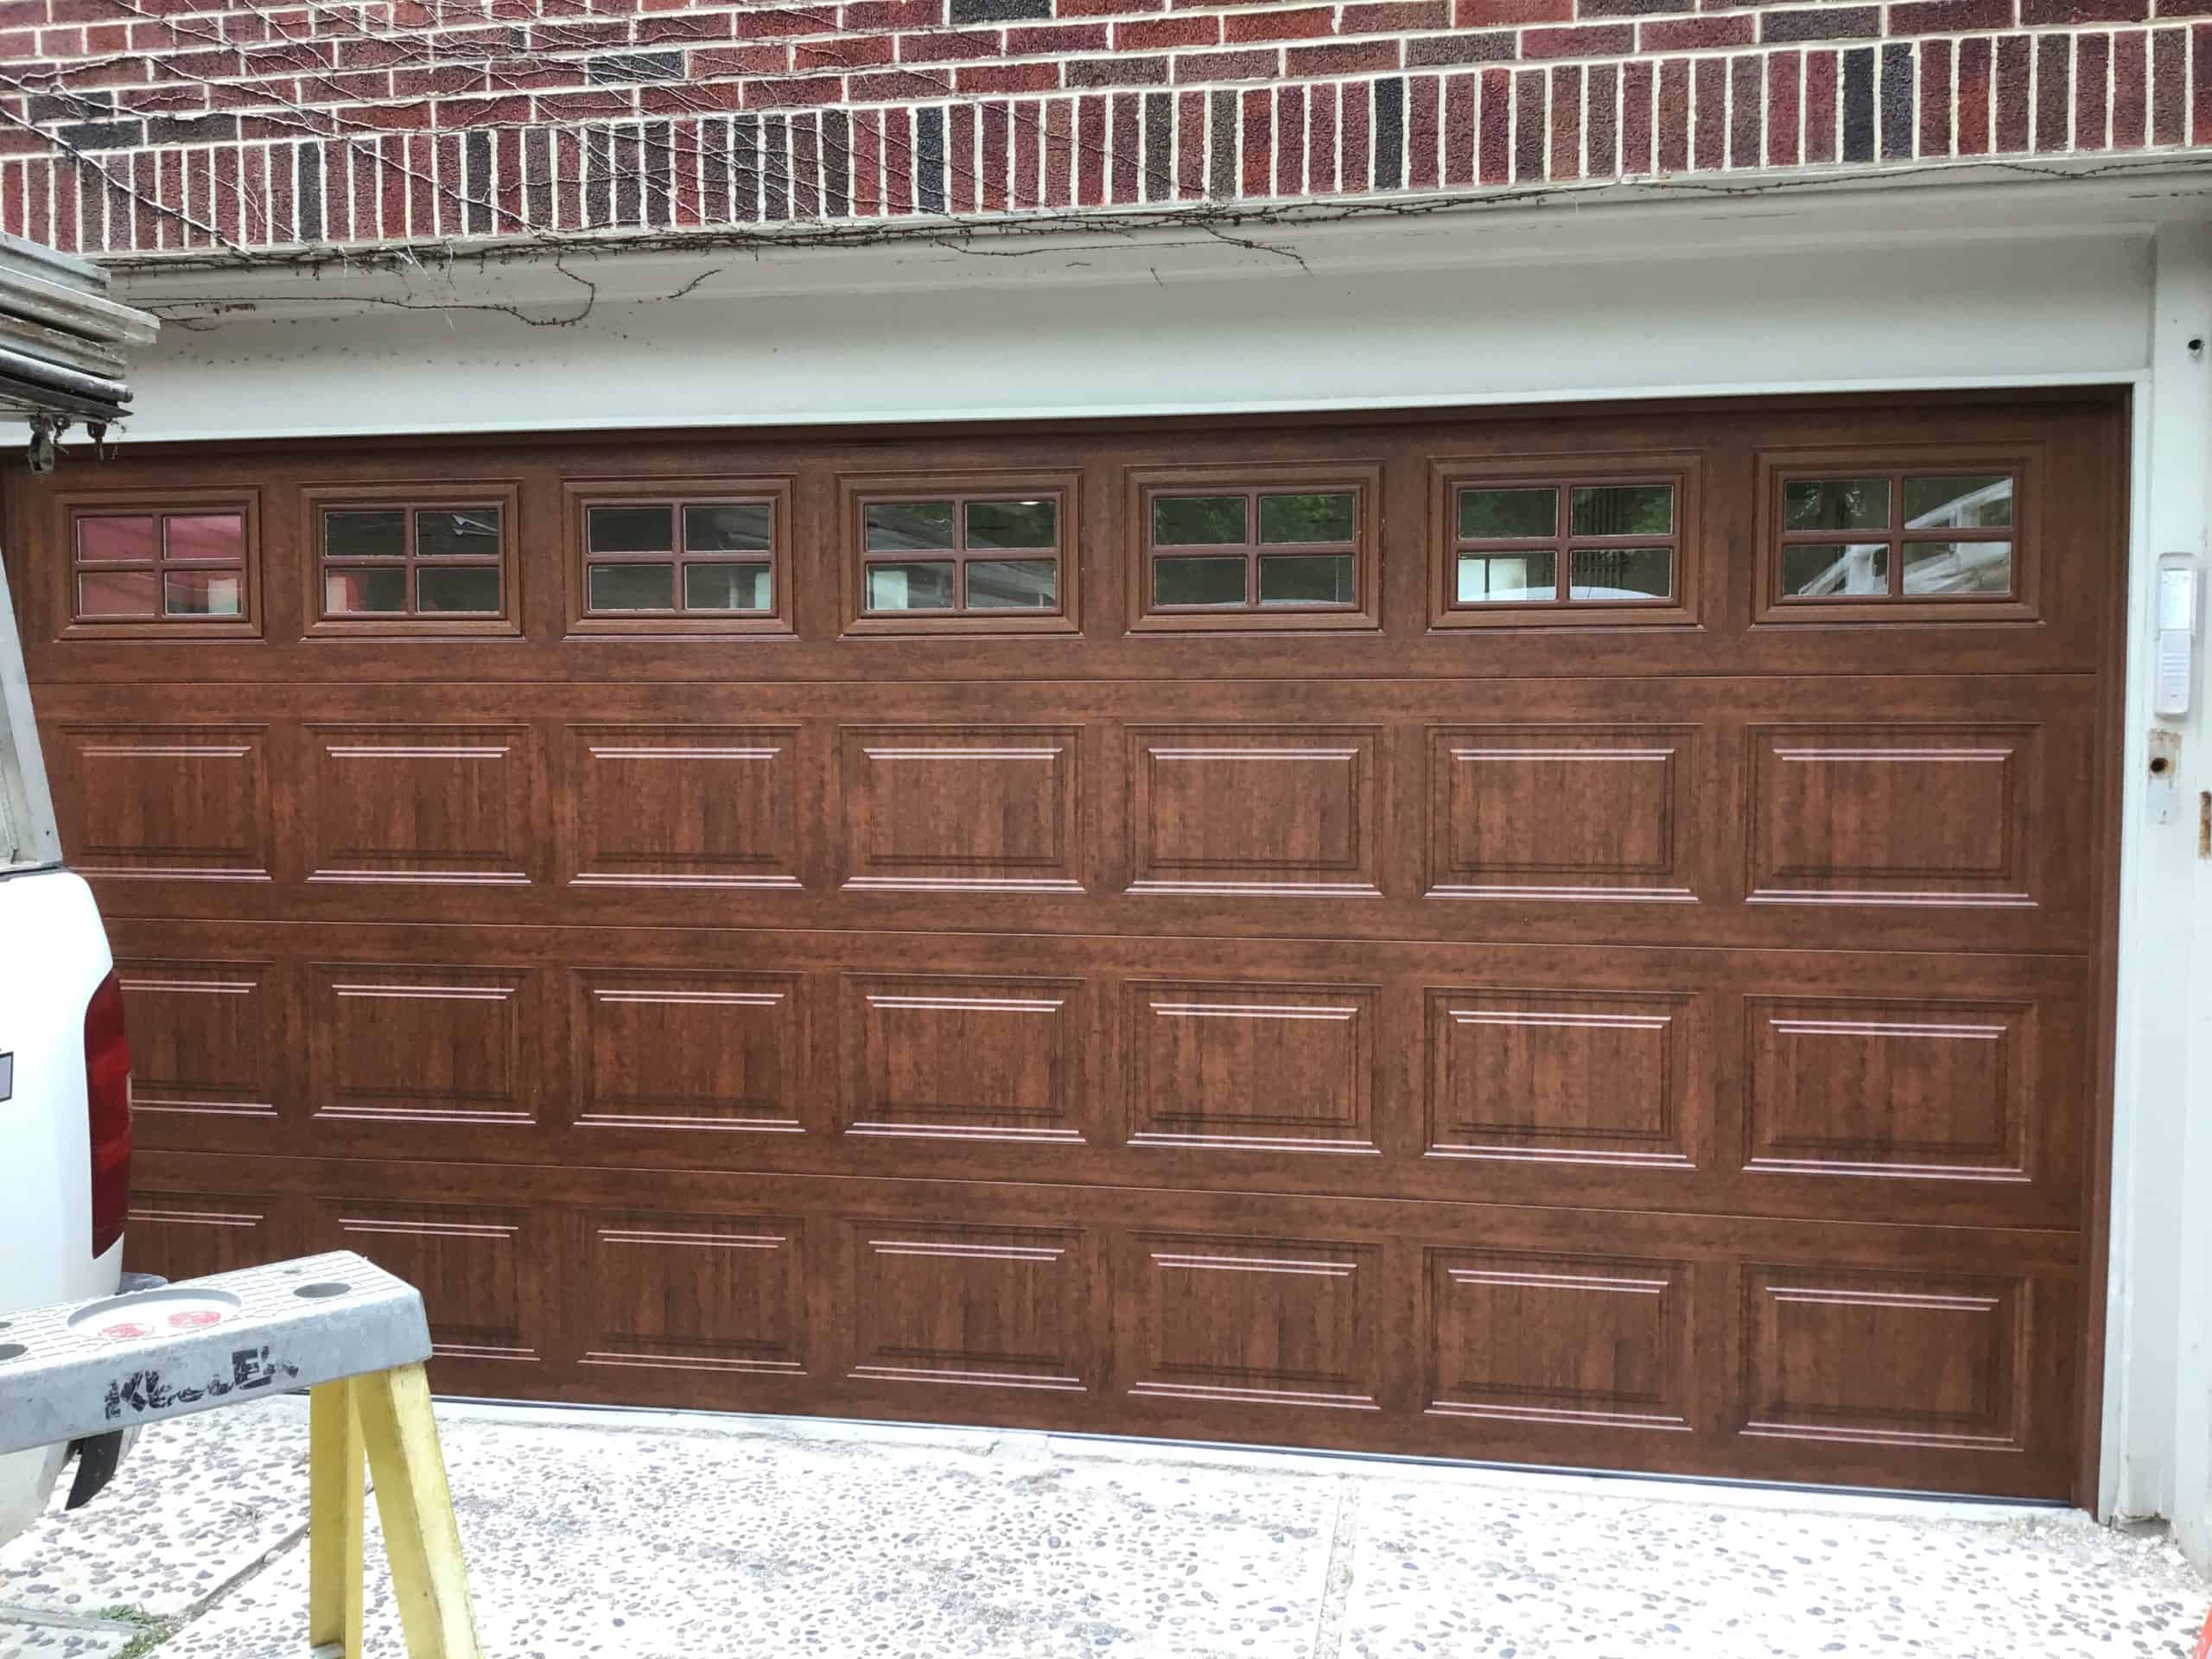 New brown wood style Cloplay garage door in Chicagoland.